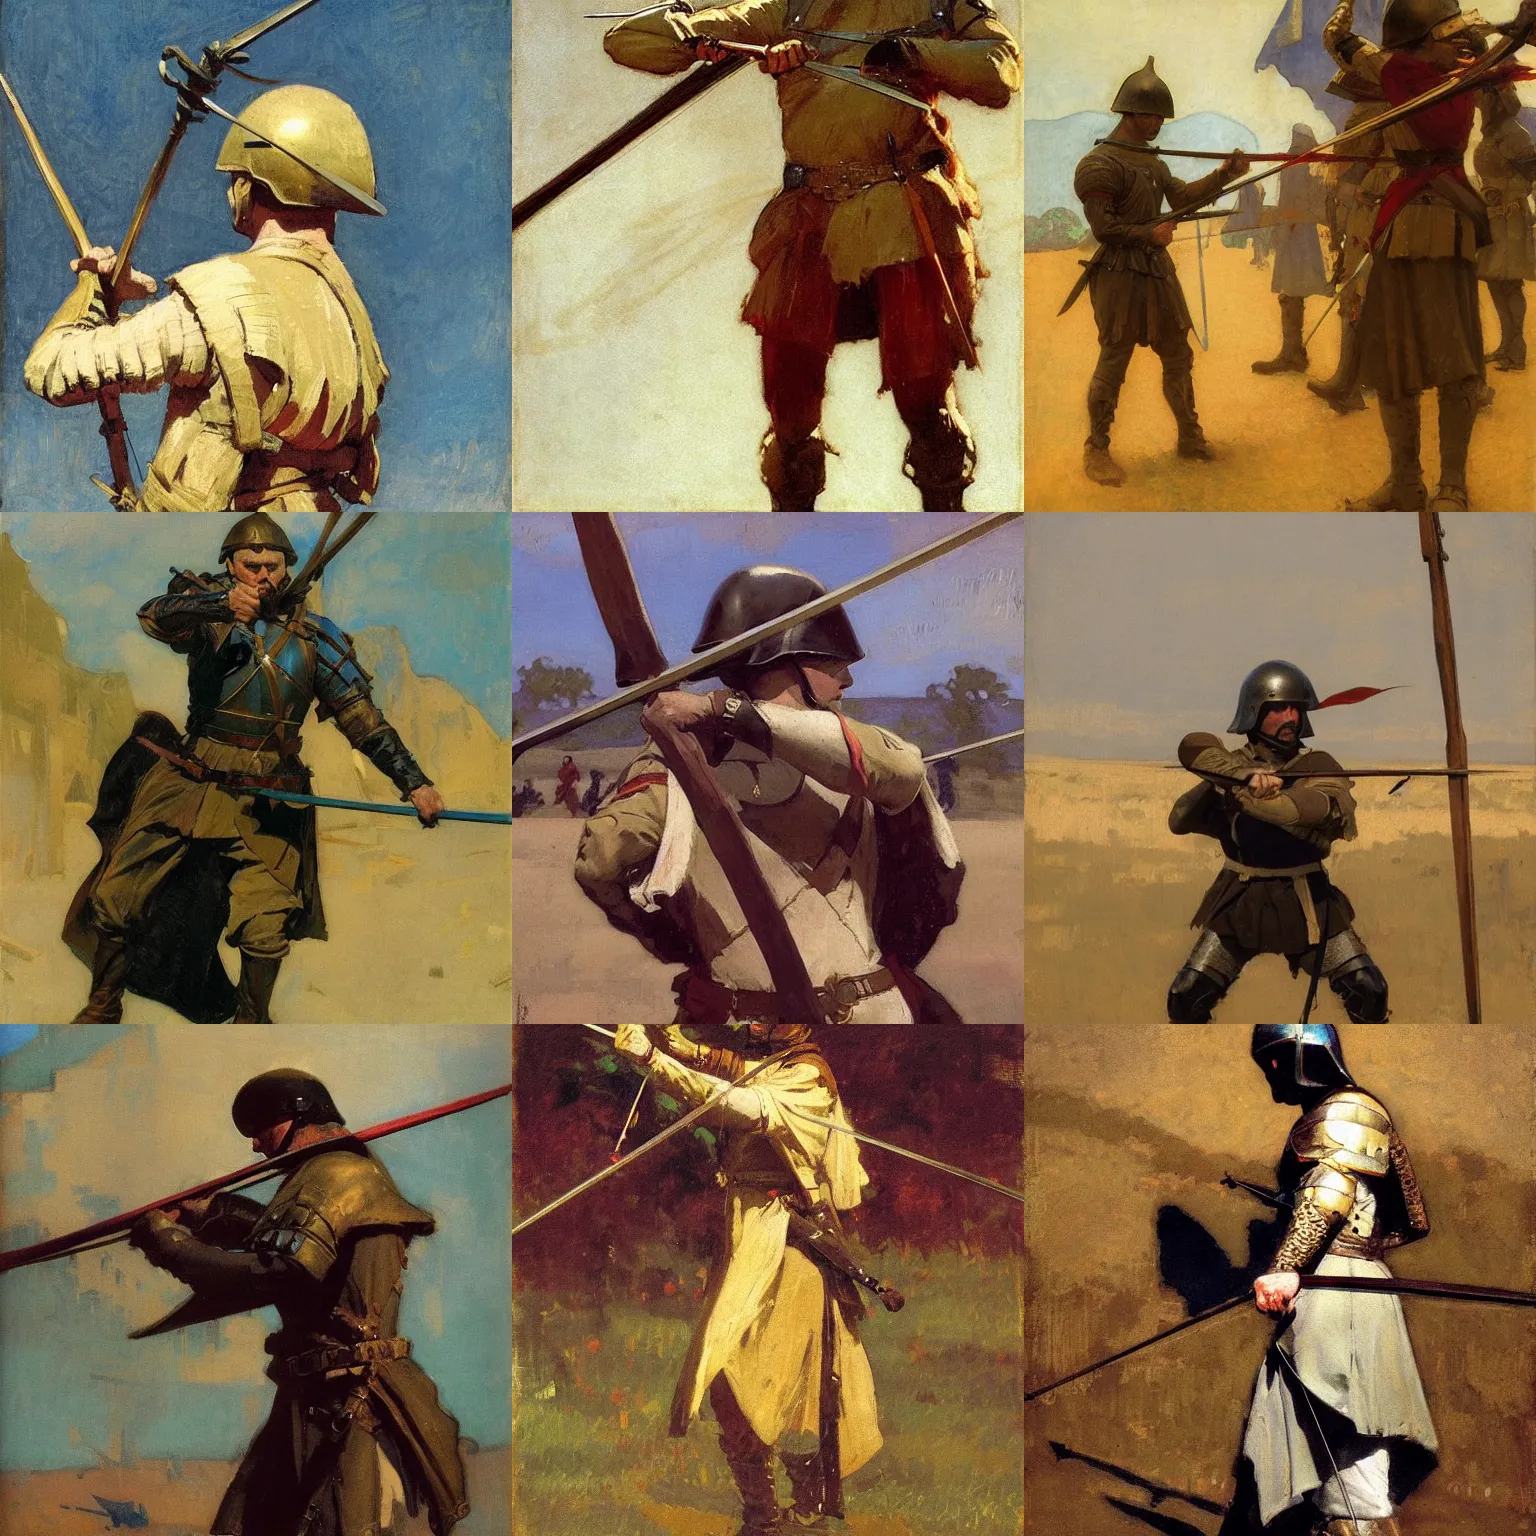 Prompt: medieval soldier aiming a bow, elegant, close - up, impressionistic, strong light, greg manchess, mucha, liepke, ruan jia, jeffrey catherine jones, bernie fuchs